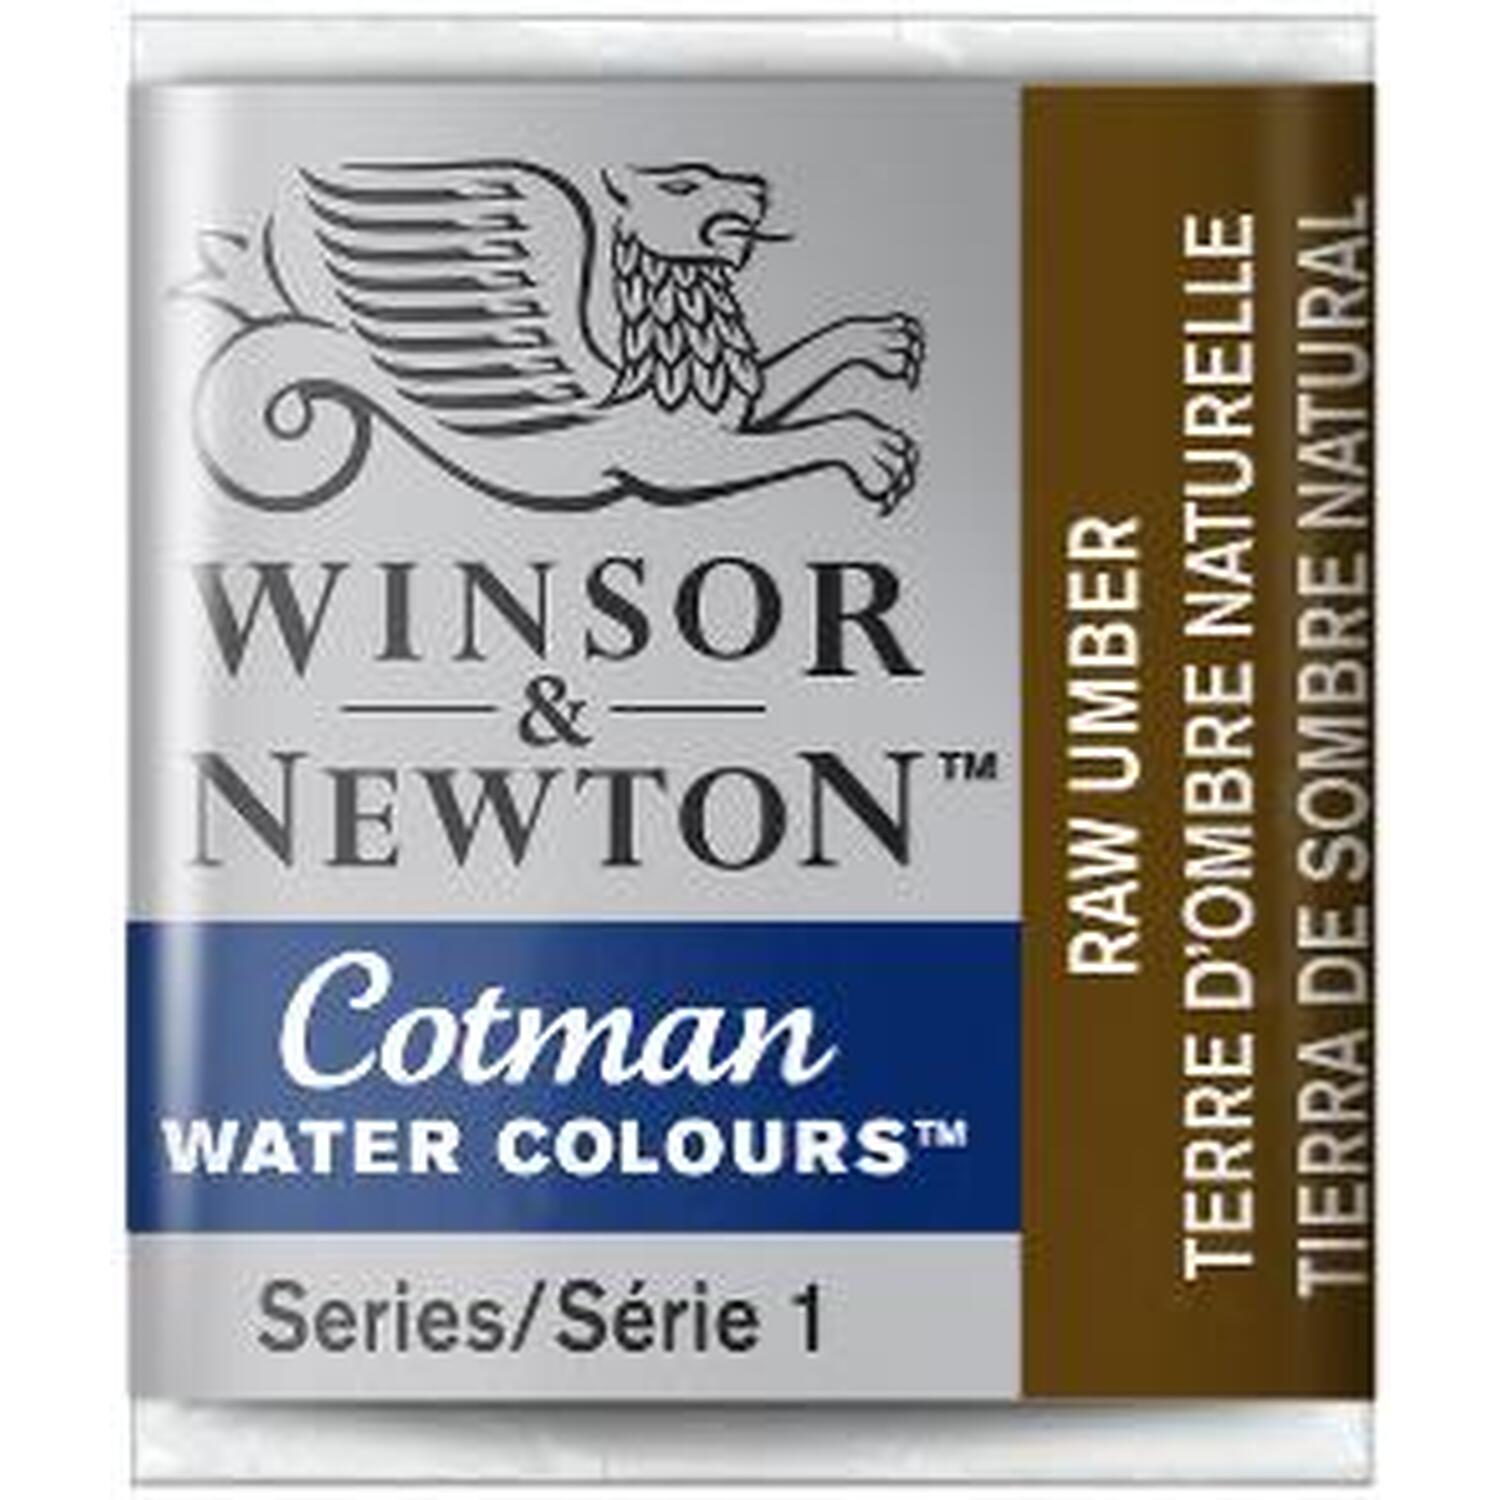 Winsor and Newton Cotman Watercolour Half Pan Paint - Raw Umber Image